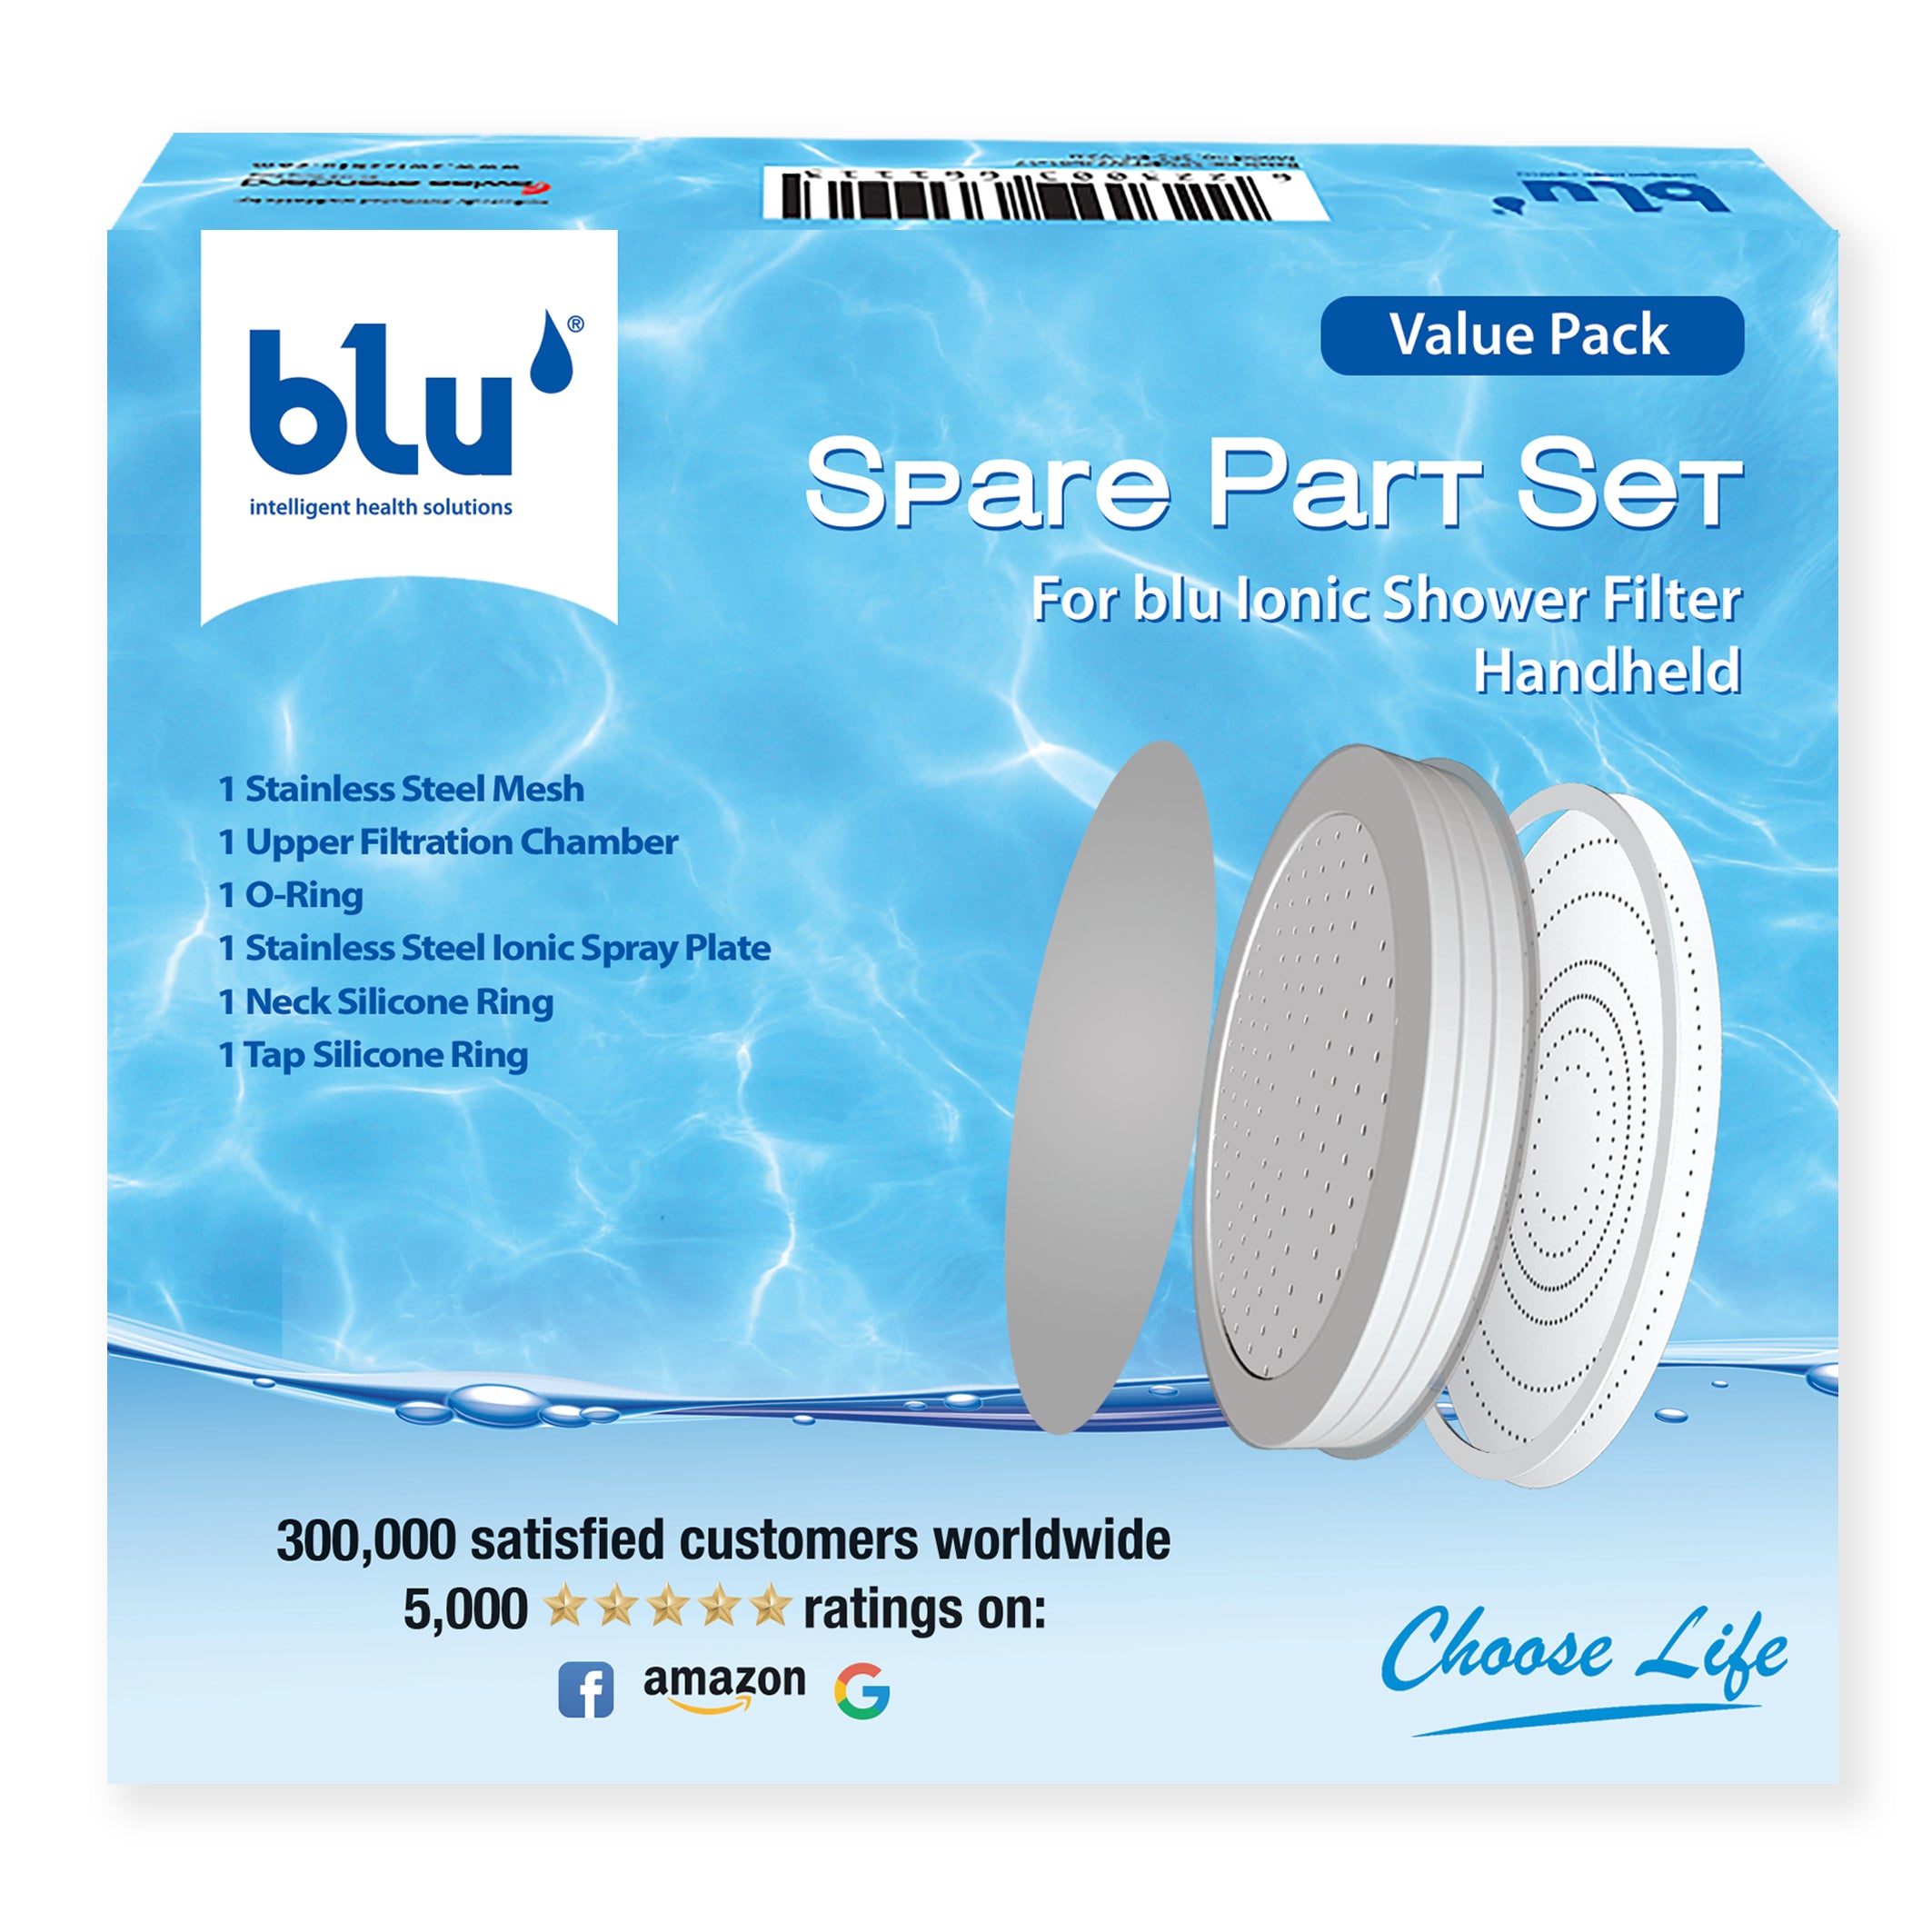 Blu Spare Part Set For Ionic Shower Filter Handheld - Value Pack